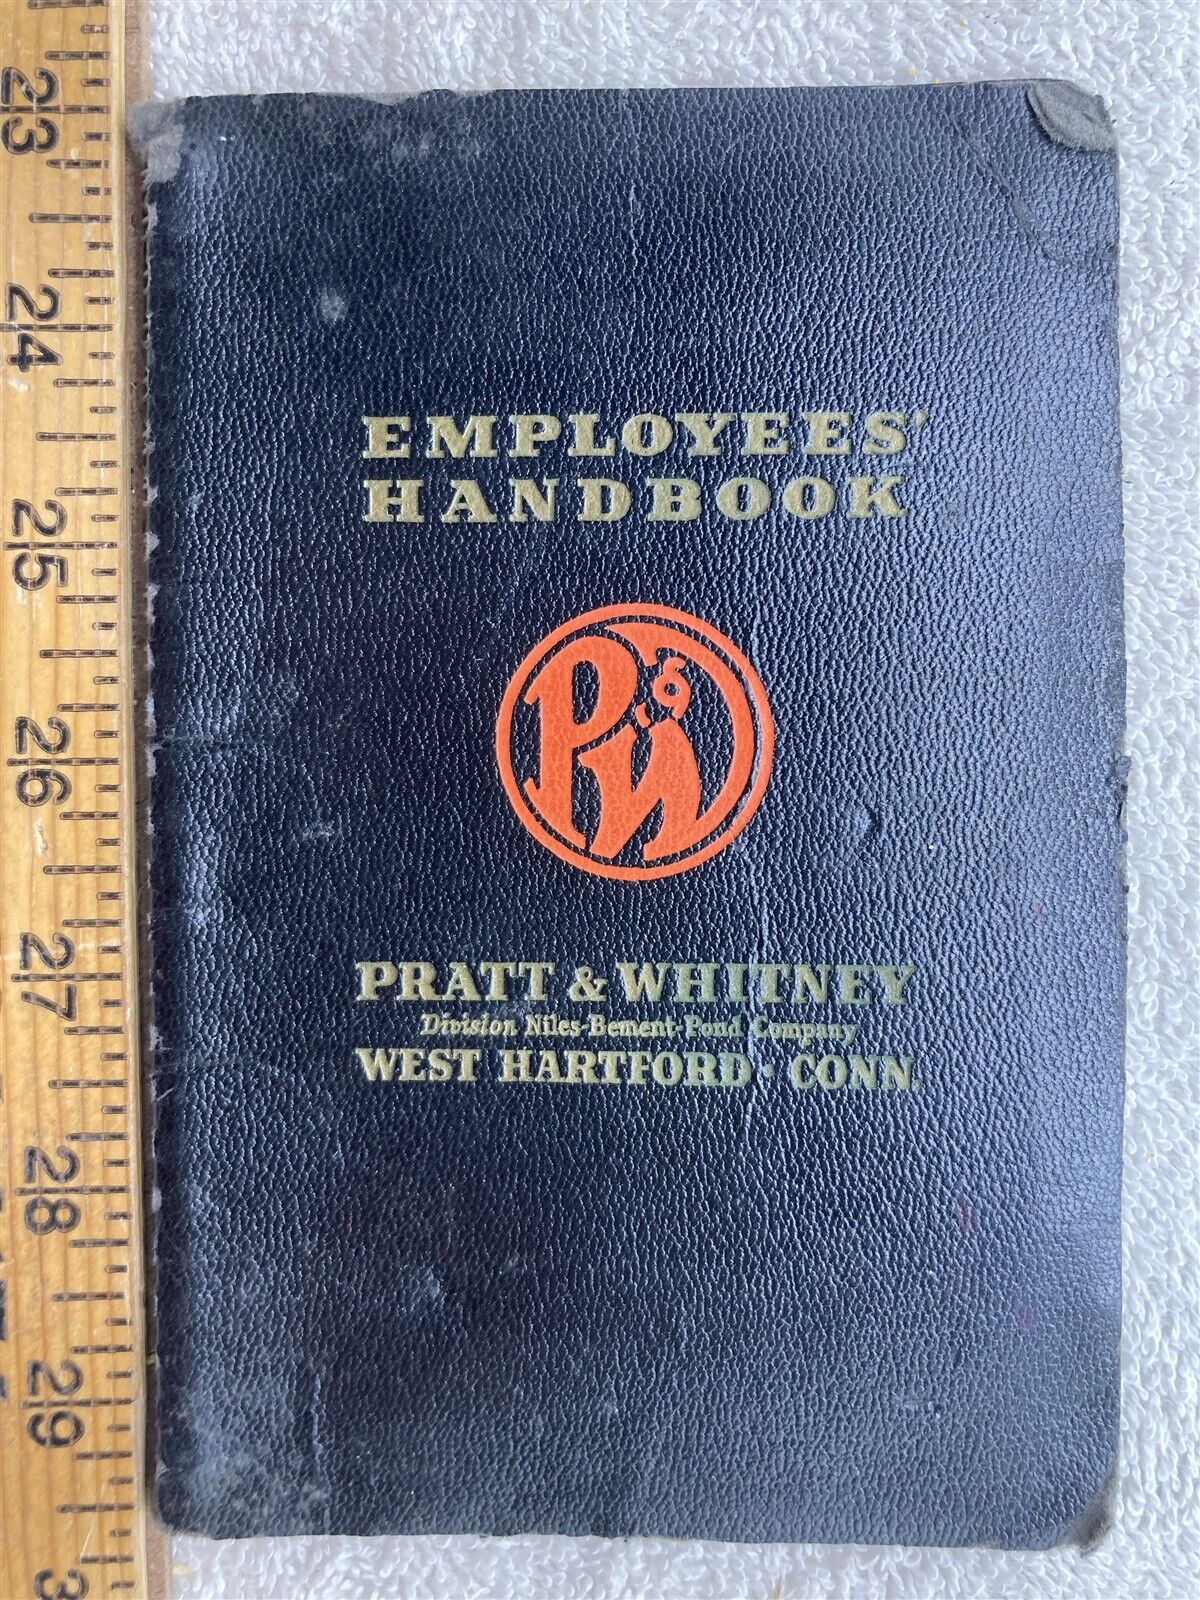 1940s 1950s ? Employees Handbook Pratt & Whitney West Hartford CT Vintage